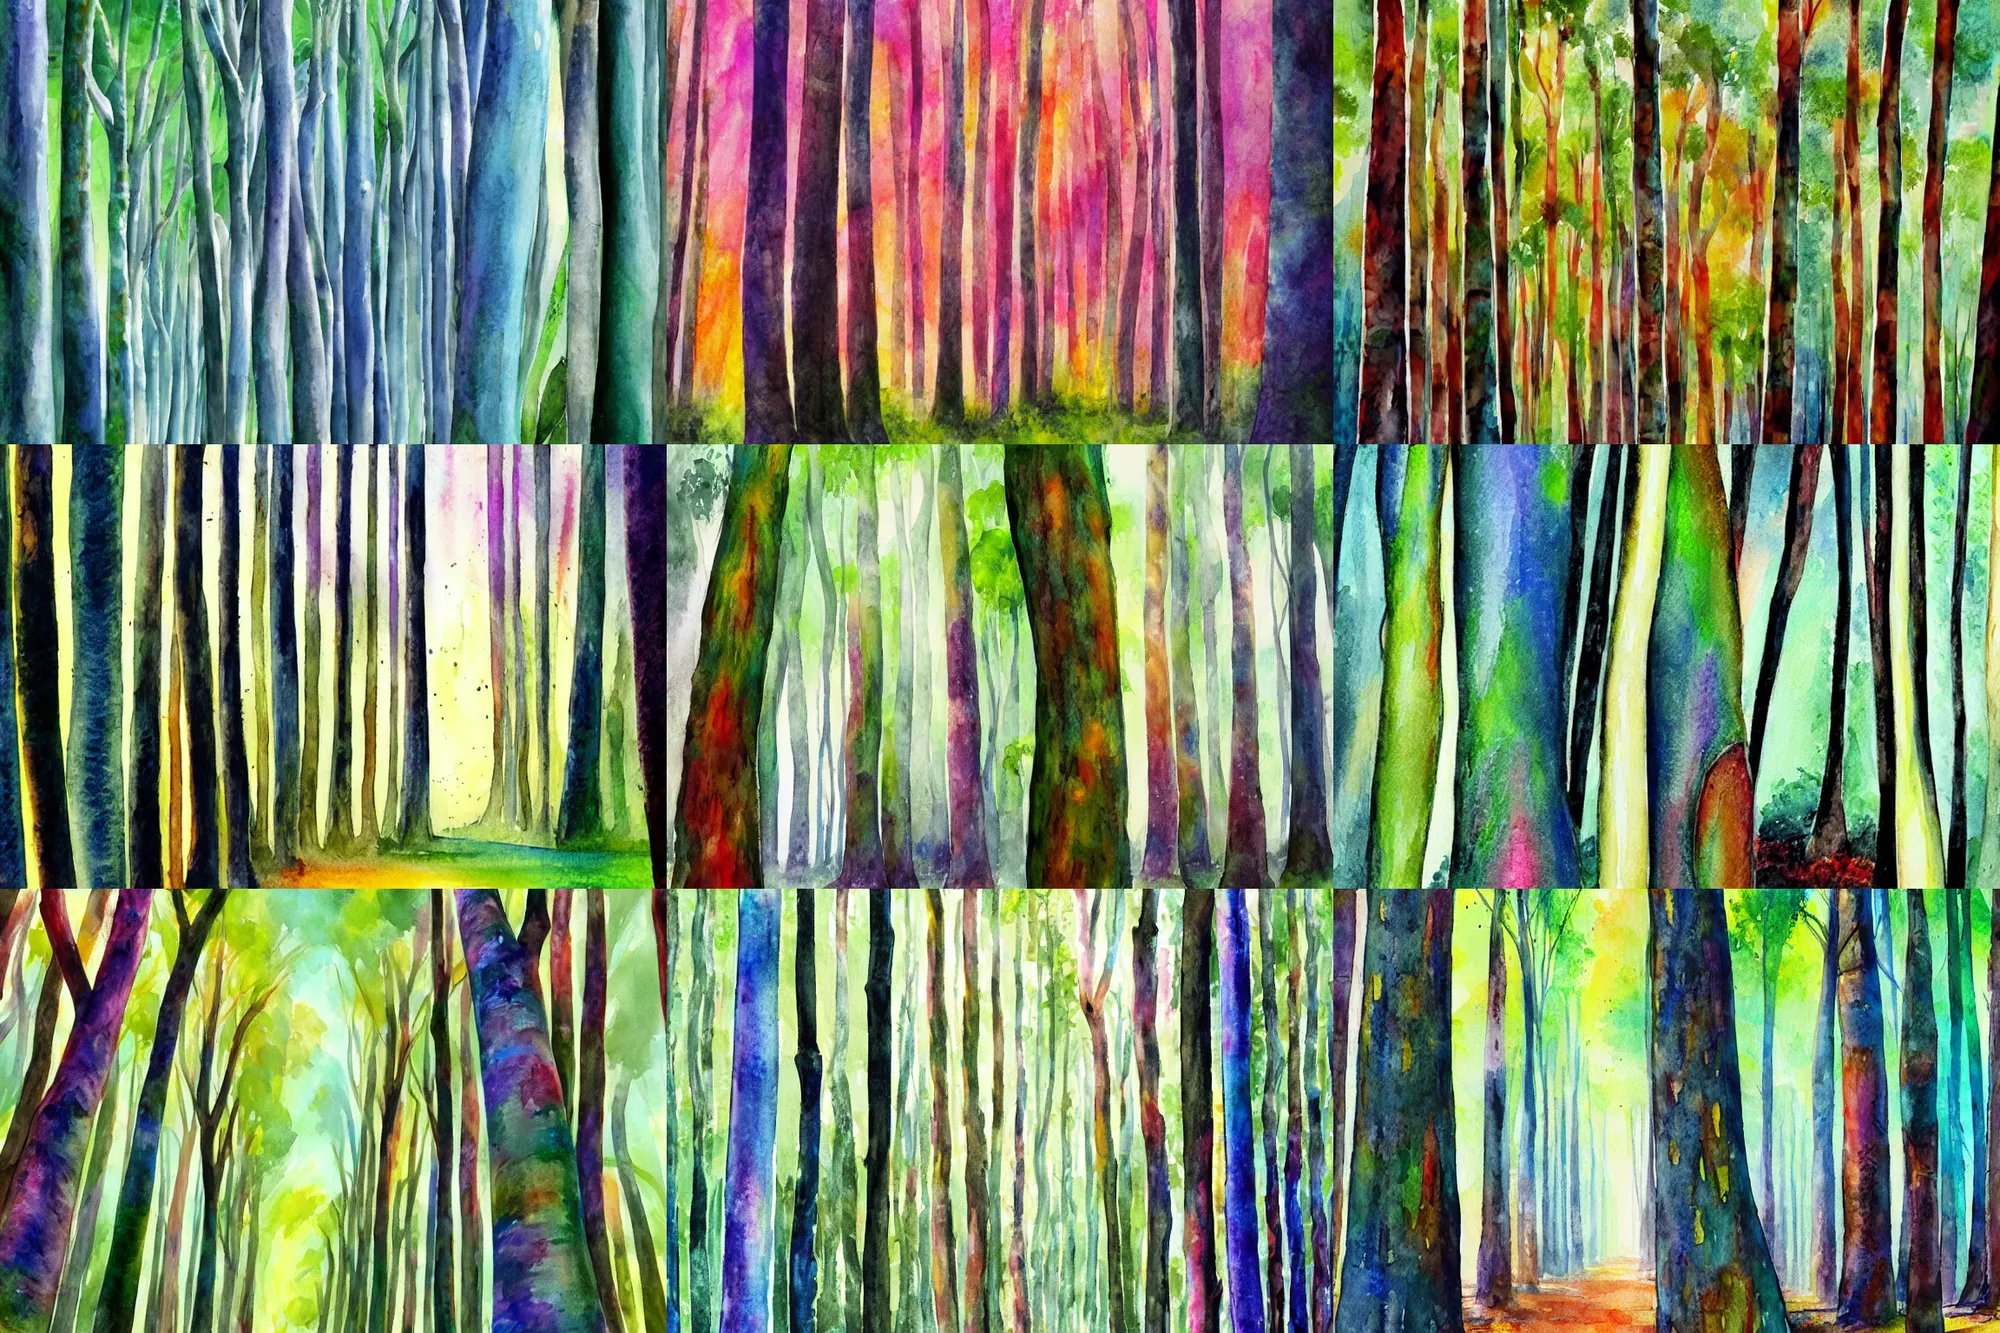 Prompt: rainbow eucalyptus forest, high quality watercolors, award winning, trending on artstation